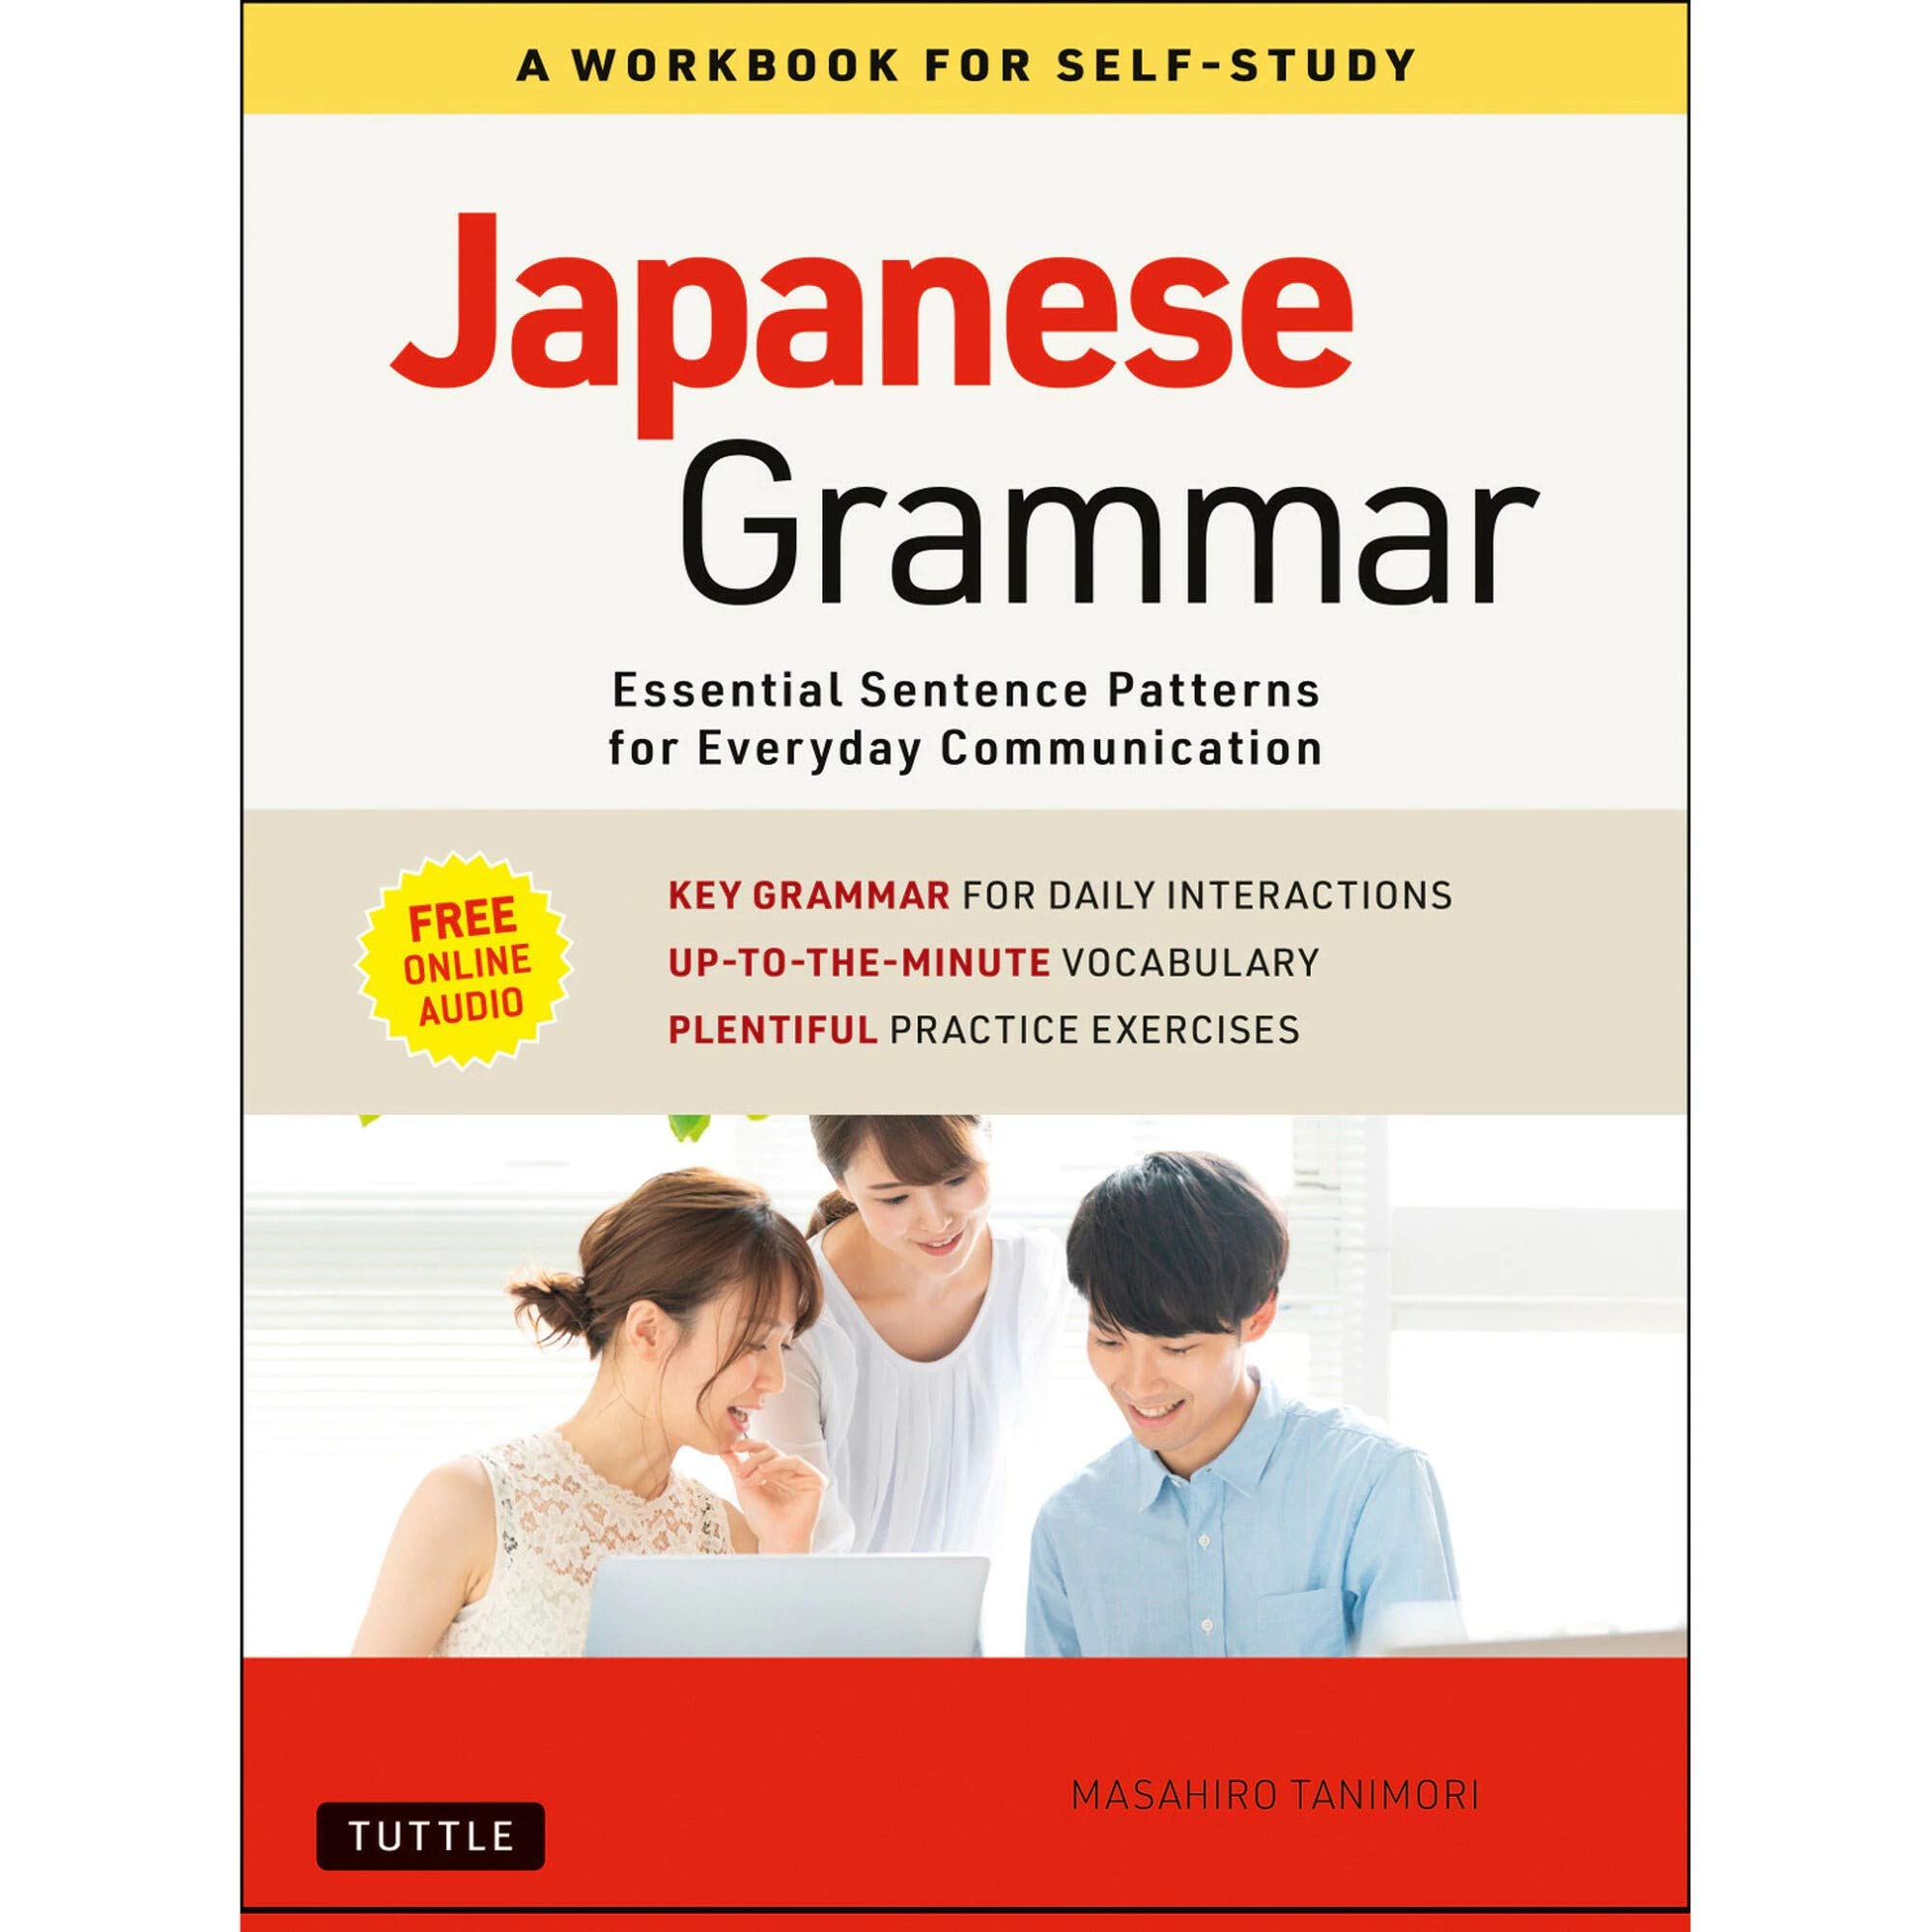 Japanese Grammar. A Workbook for Self-Study